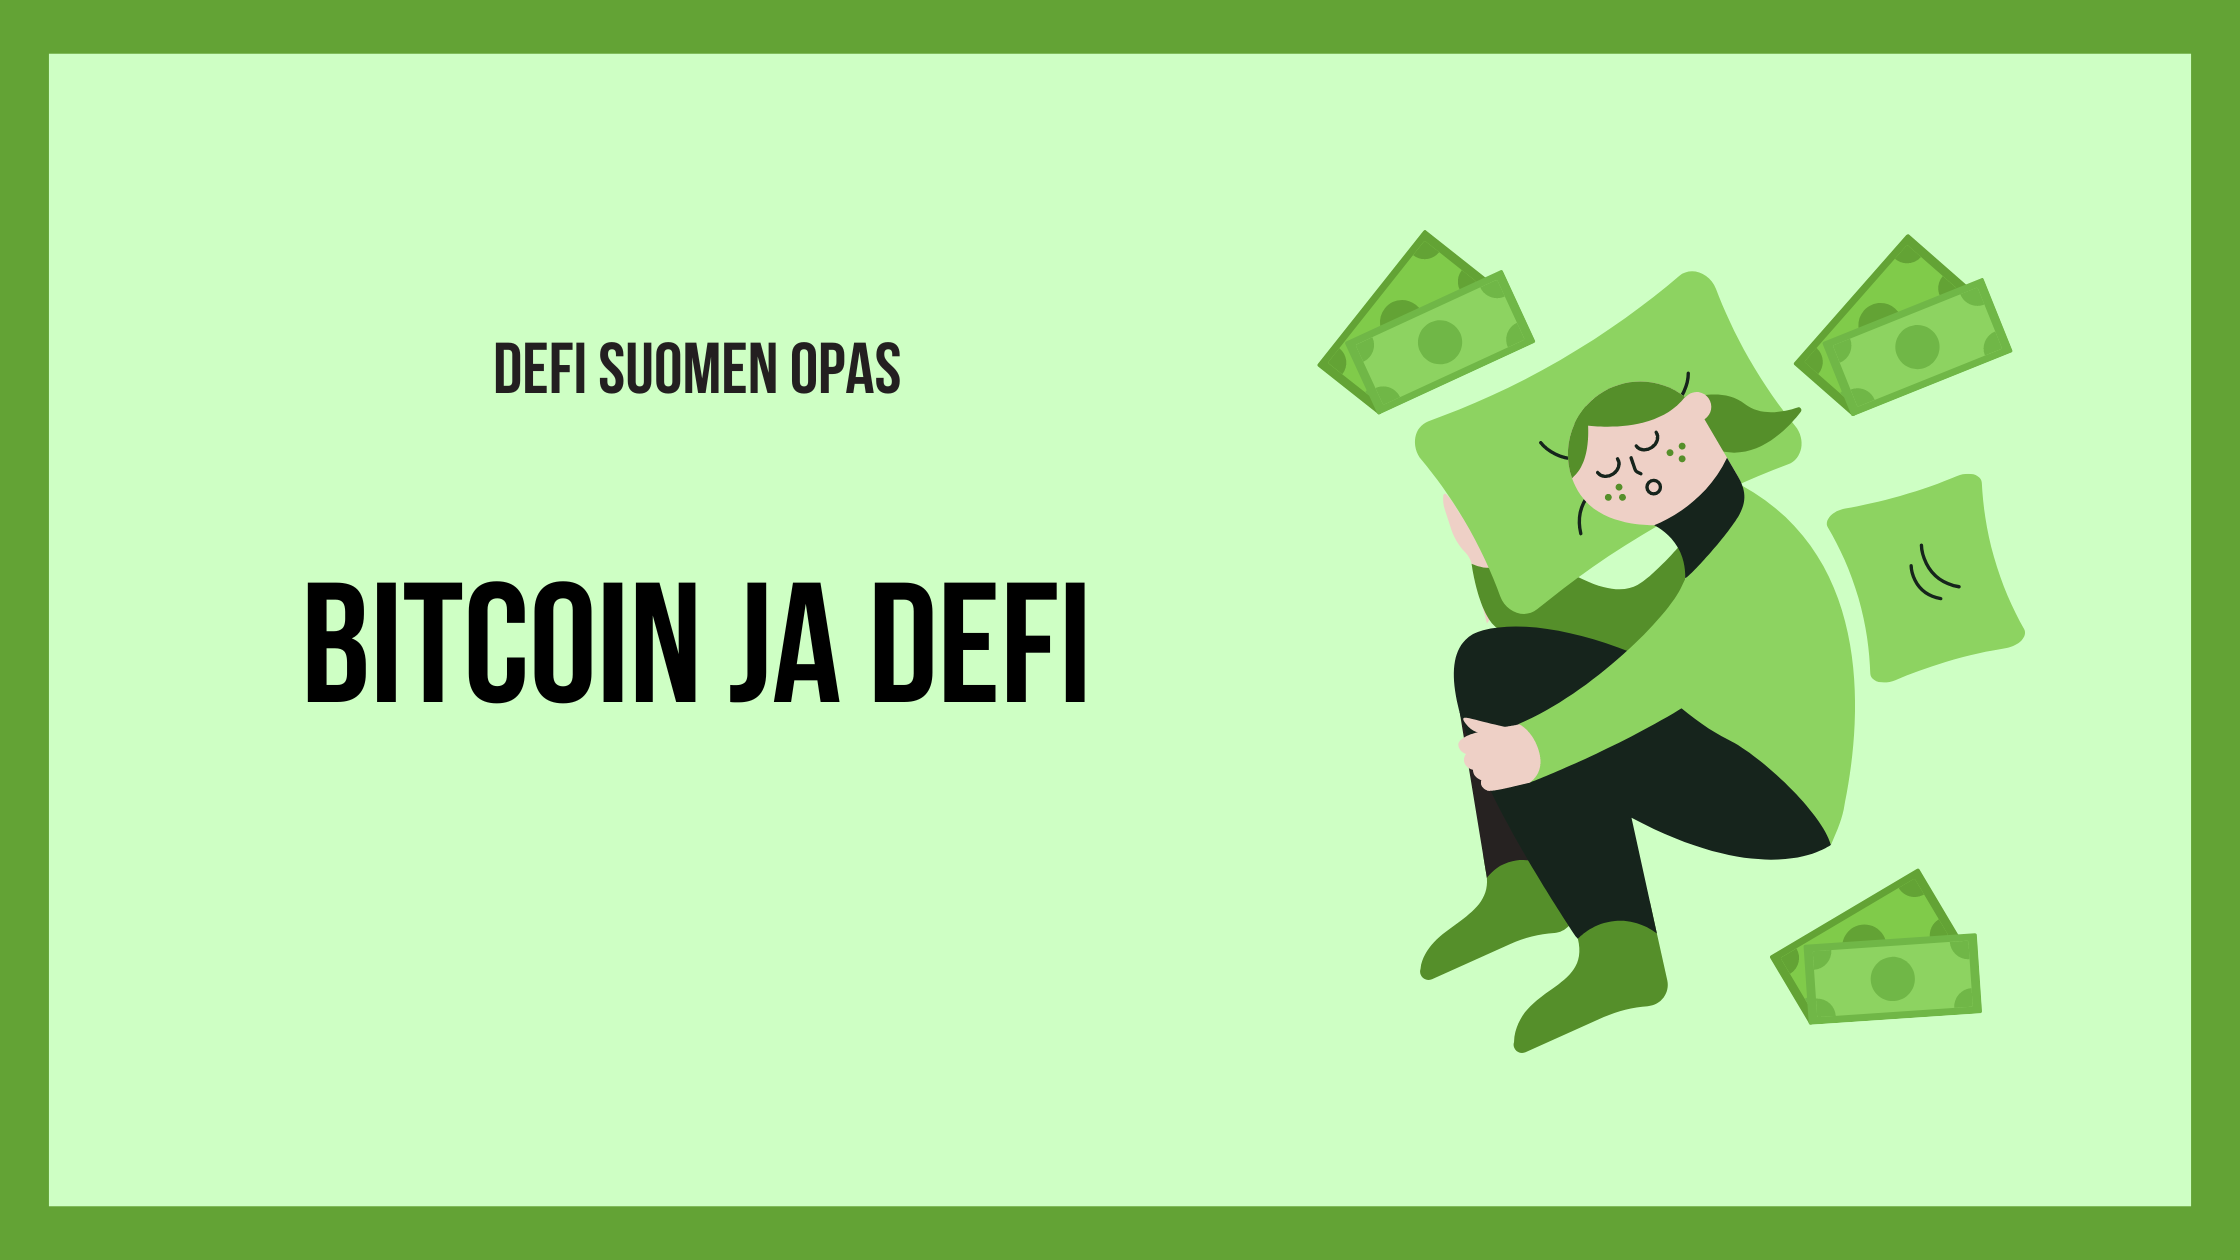 Defi Suomen opas: Bitcoin ja defi